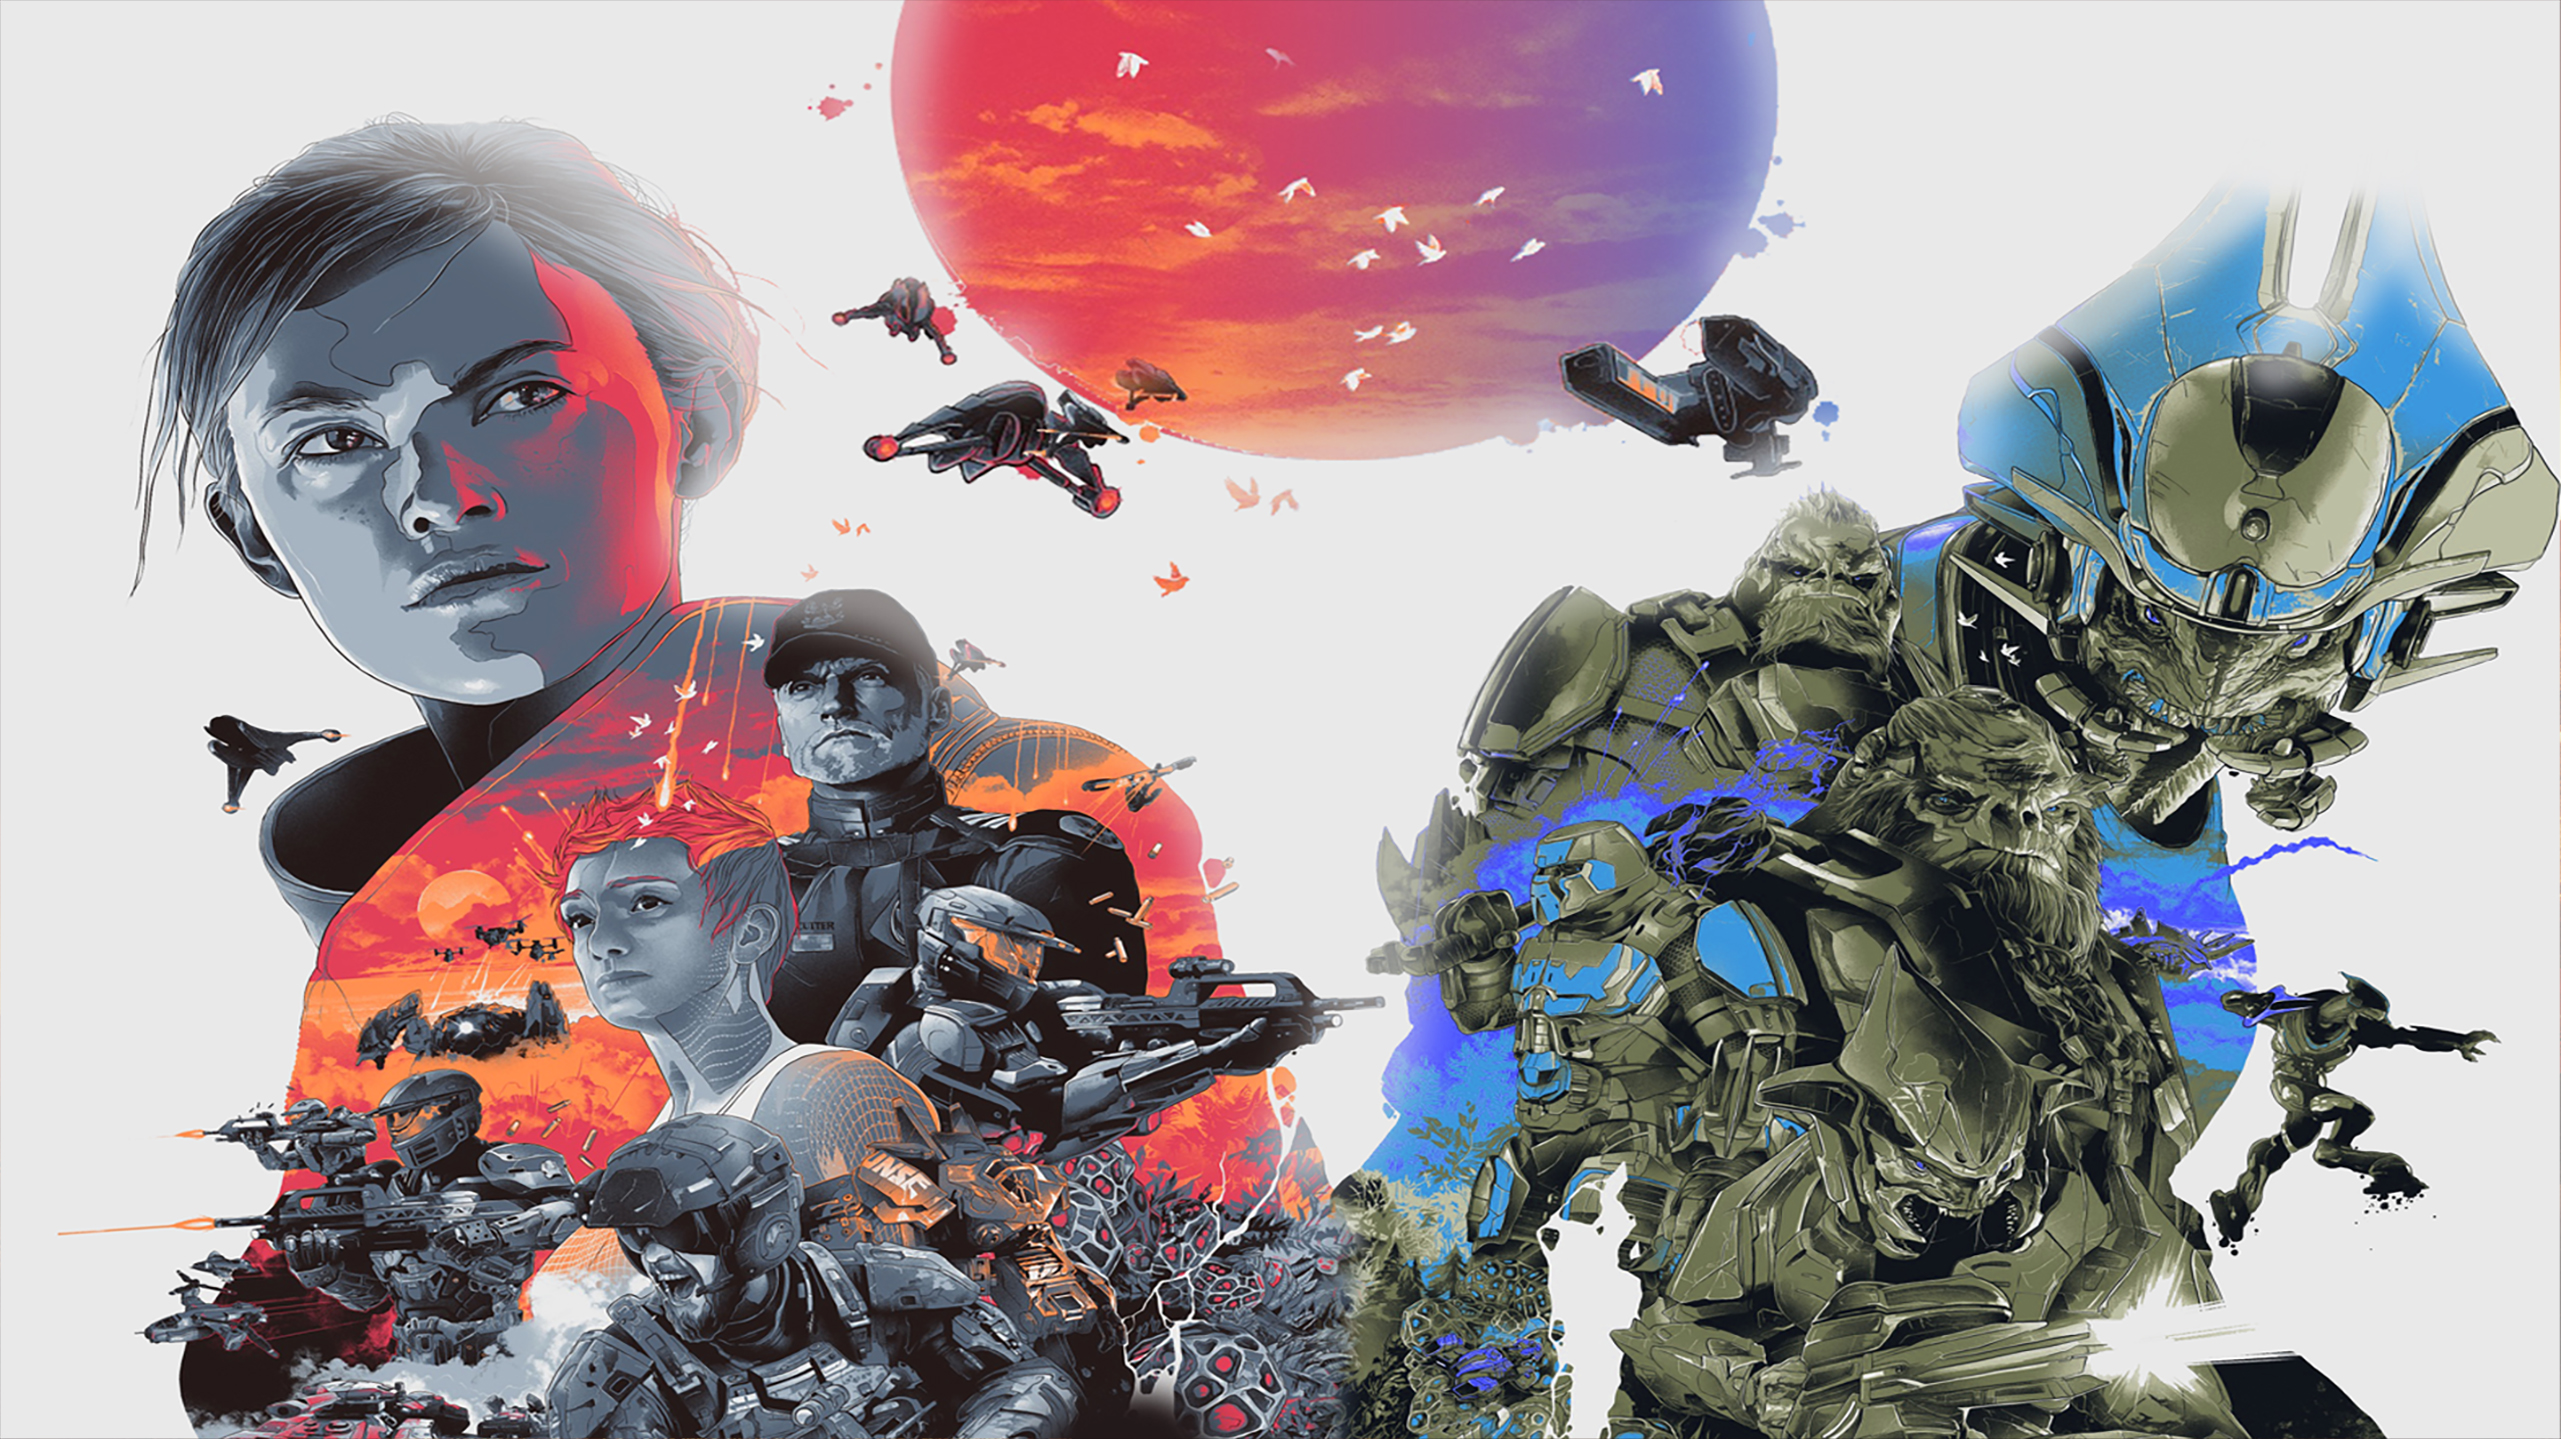 Halo Wars 2 Background